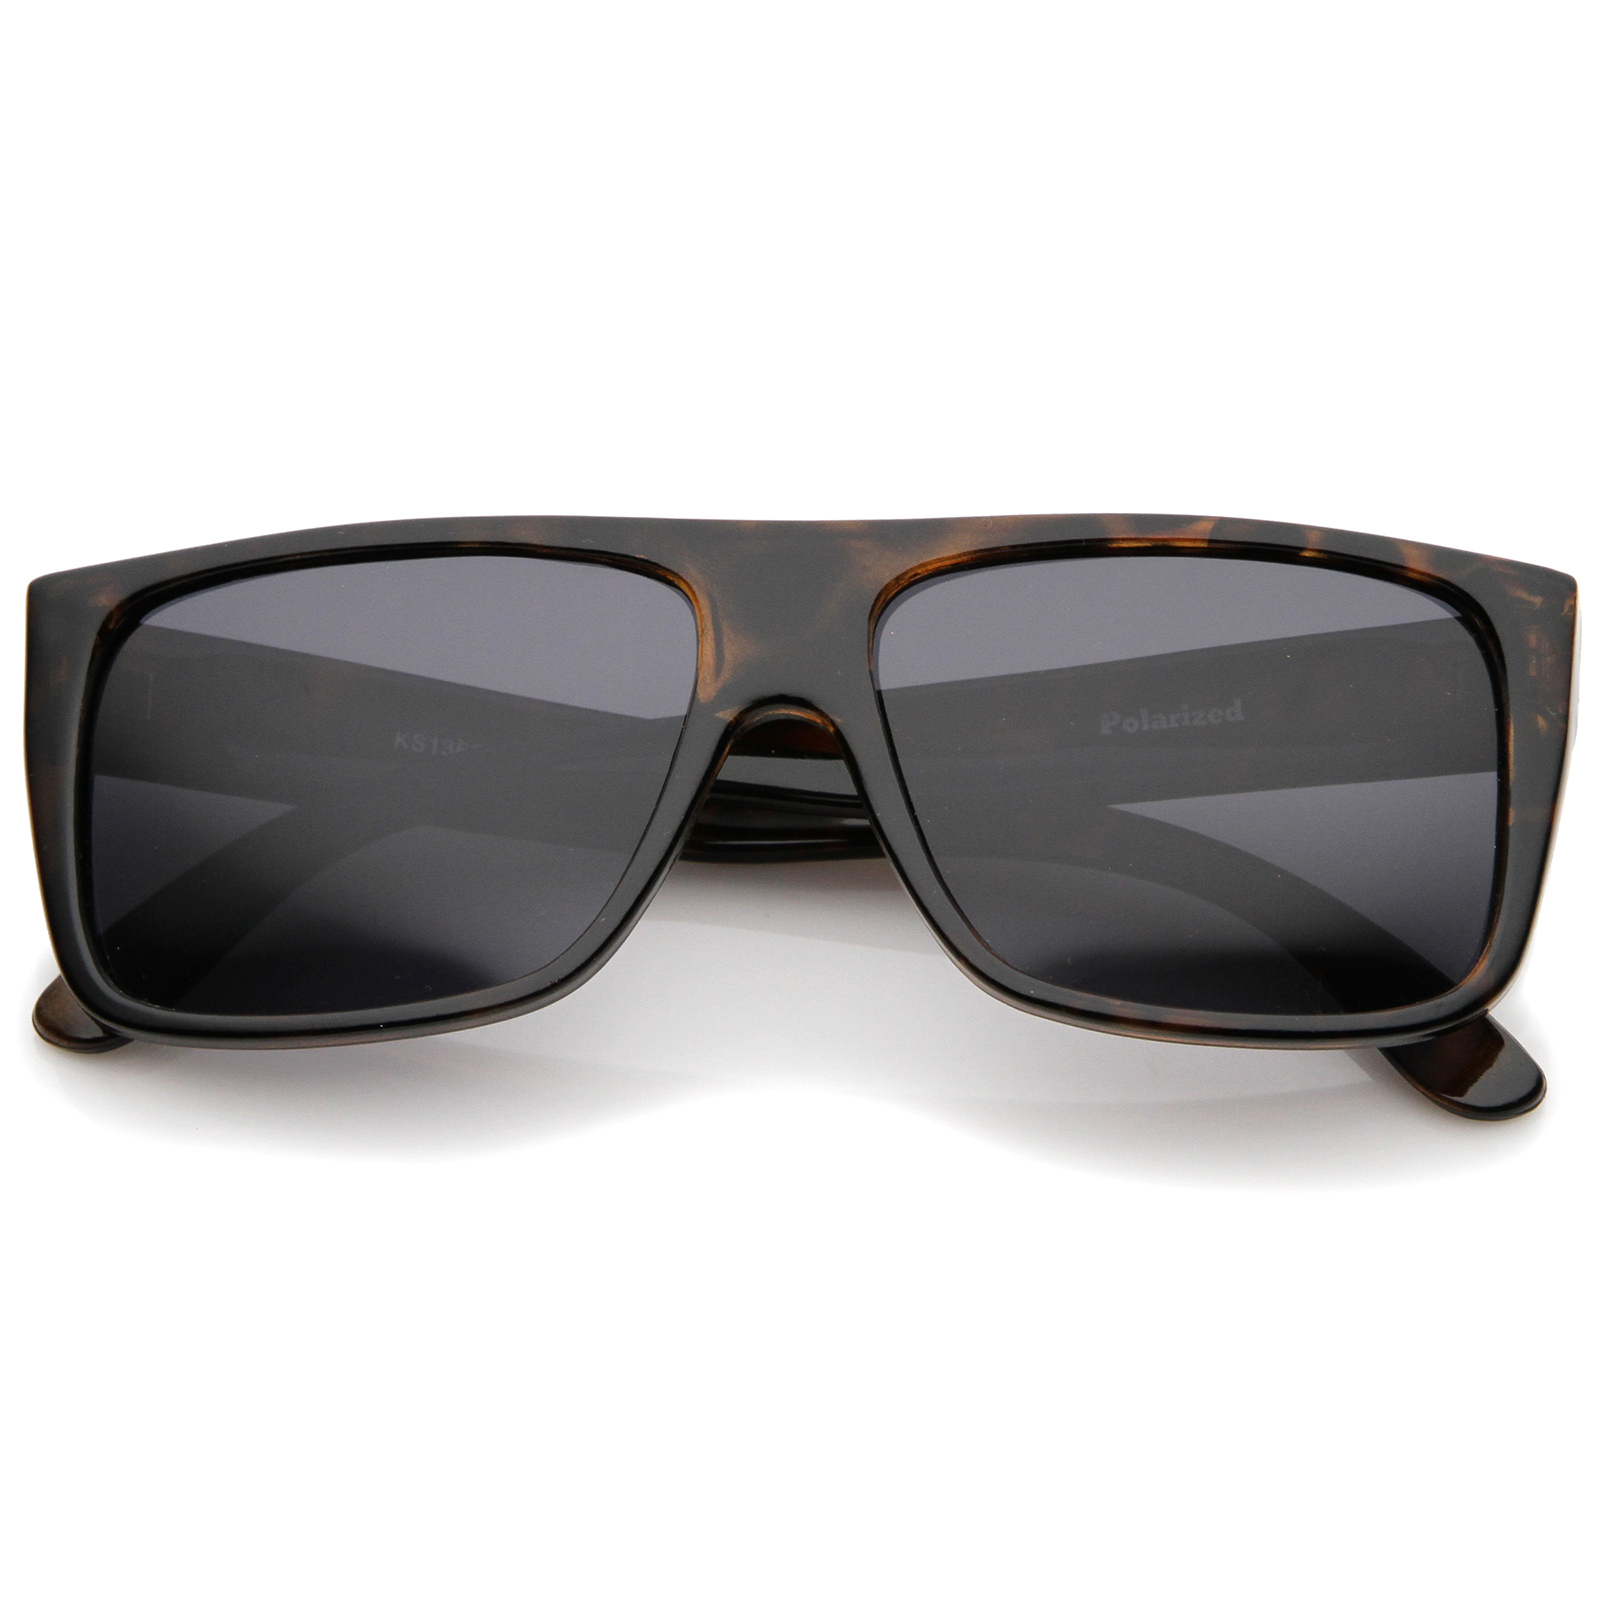 Classic Old School Easy E Flat Top Polarized Lens Sunglasses 57mm (Tortoise / Smoke Polarized) - image 1 of 4